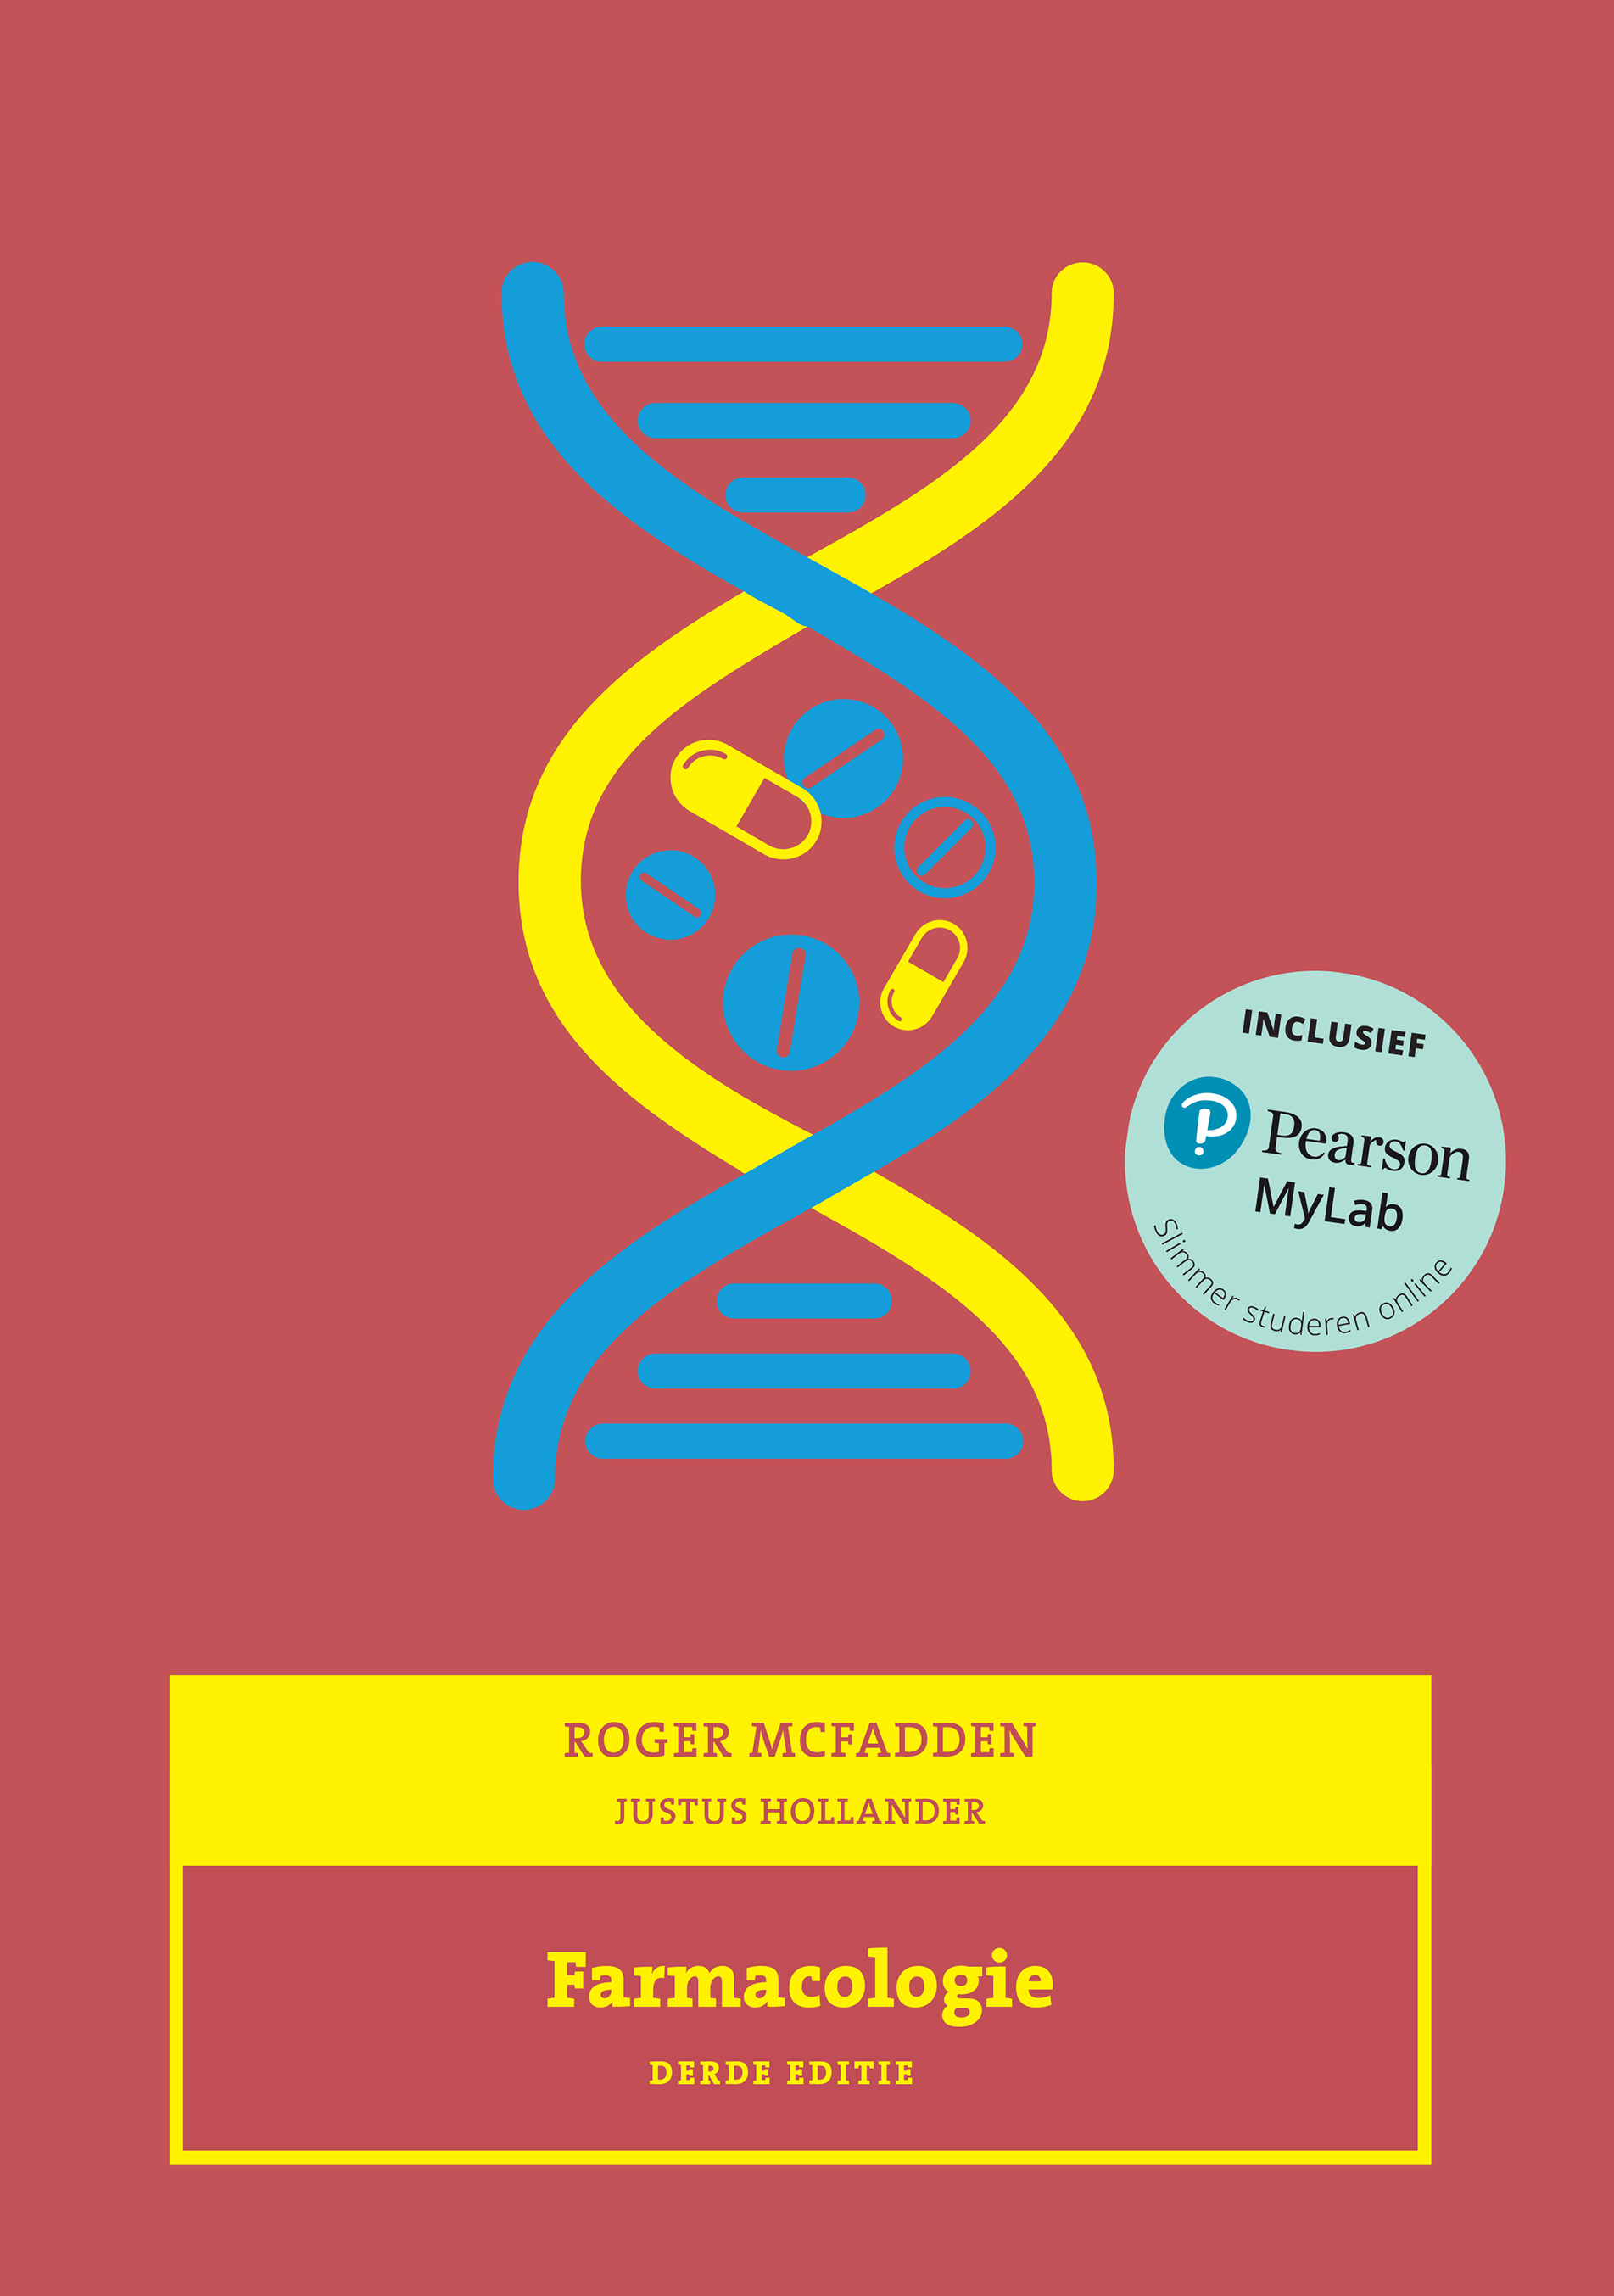 Farmacologie, 3e editie met MyLab NL toegangscode